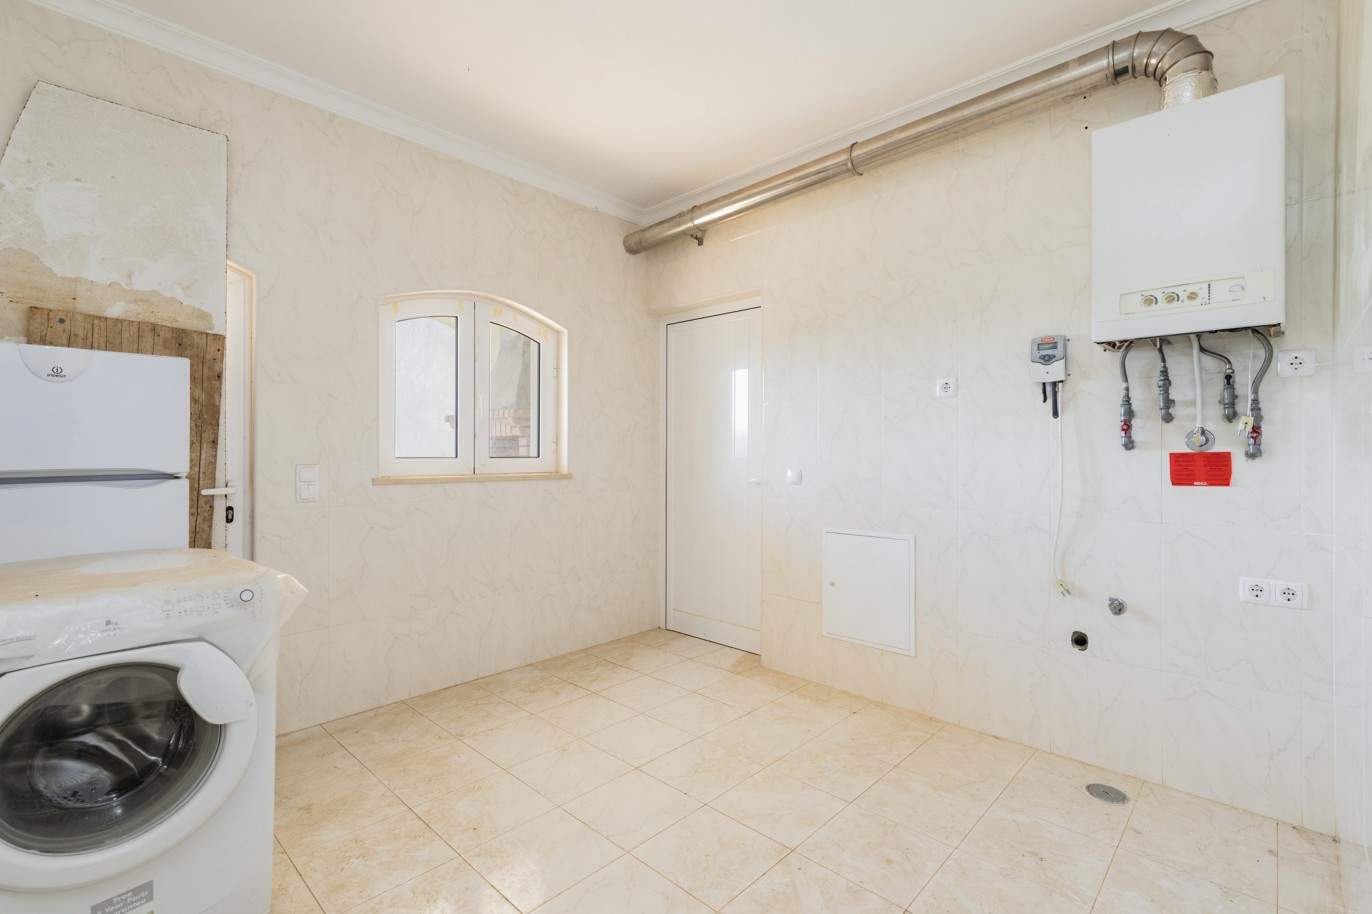 4 Bedroom Villa à vendre à Monte Judeu, Portimão, Algarve_207298